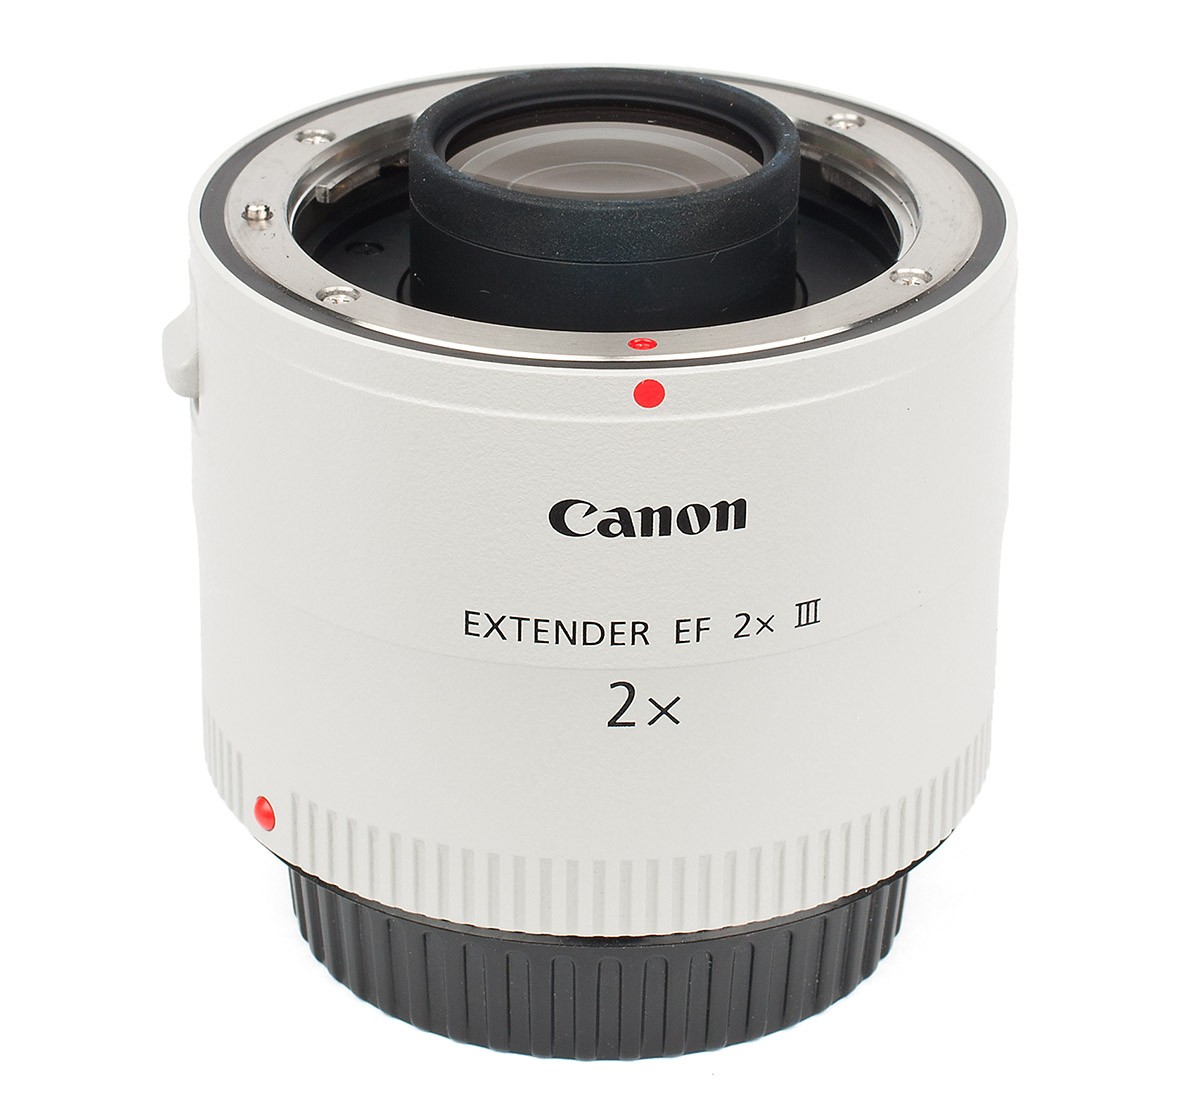 Canon Extender EF 2x III test